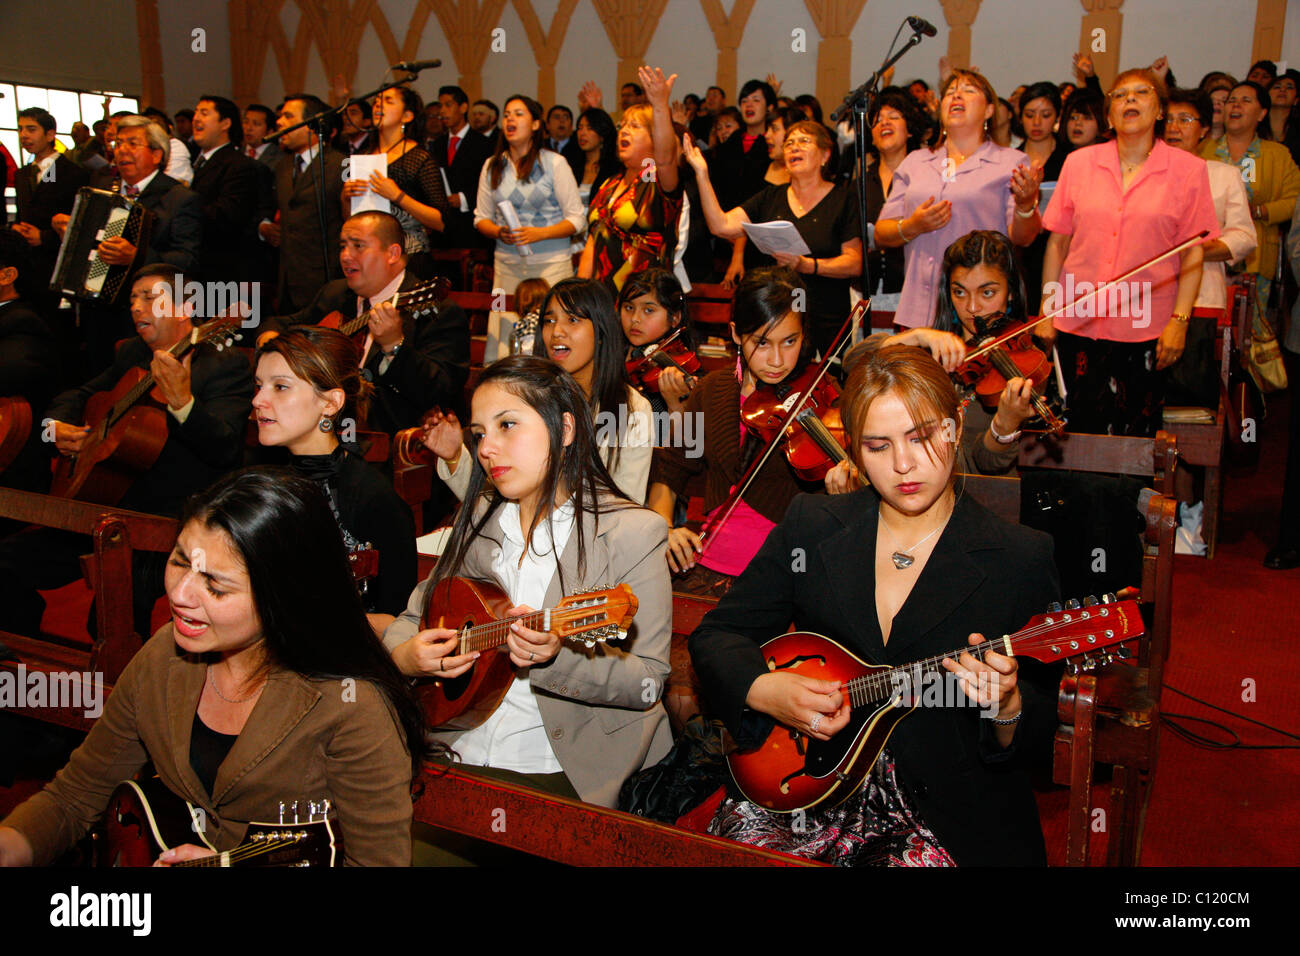 las-mujeres-haciendo-musica-culto-catedral-evangelica-de-la-iglesia-pentecostal-de-chile-santiago-de-chile-chile-sudamerica-c120cm.jpg